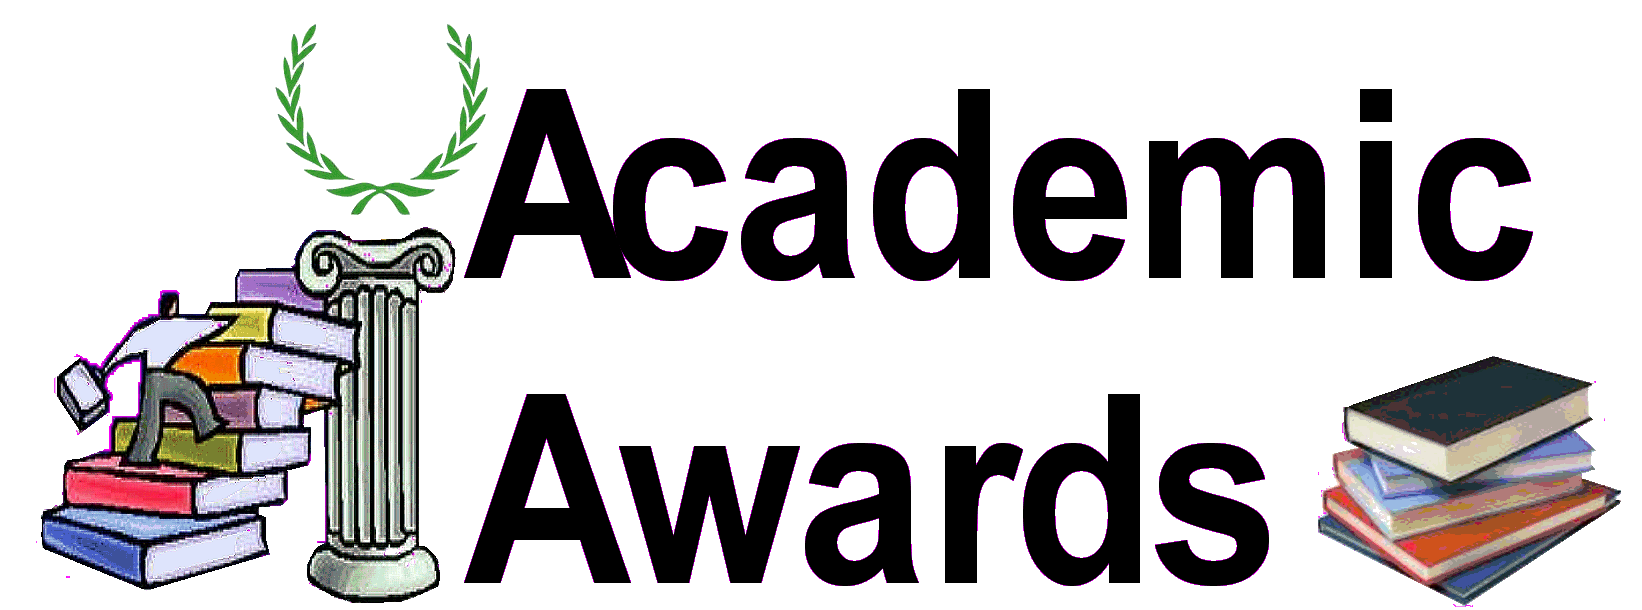 Academic awards cif southern. Prize clipart appreciation award